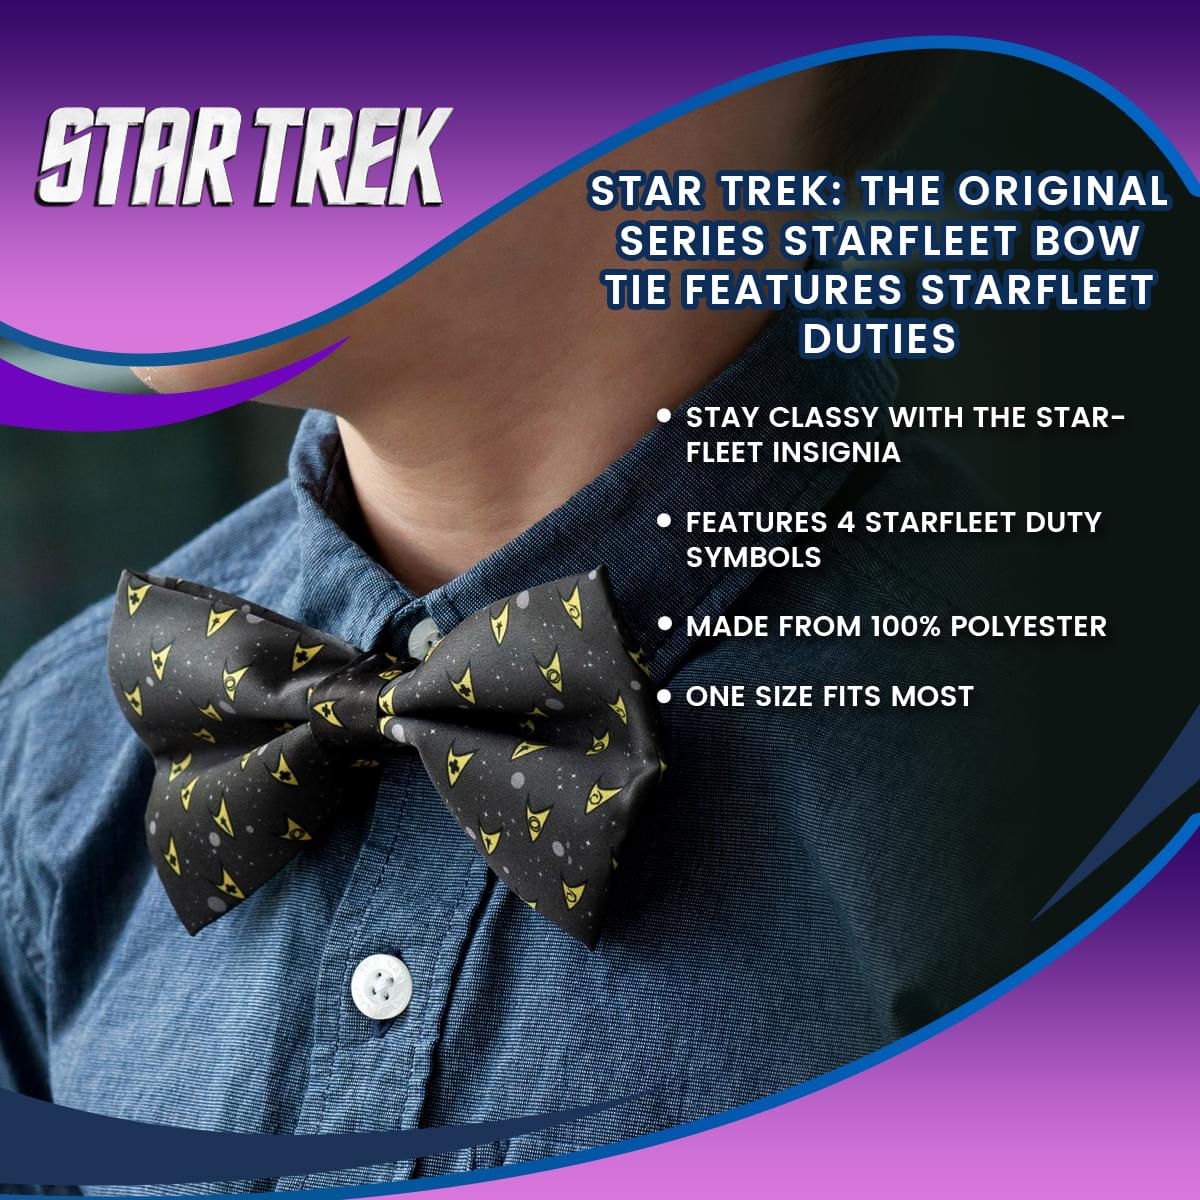 Star Trek: The Original Series Starfleet Bow Tie | Features Starfleet Duties